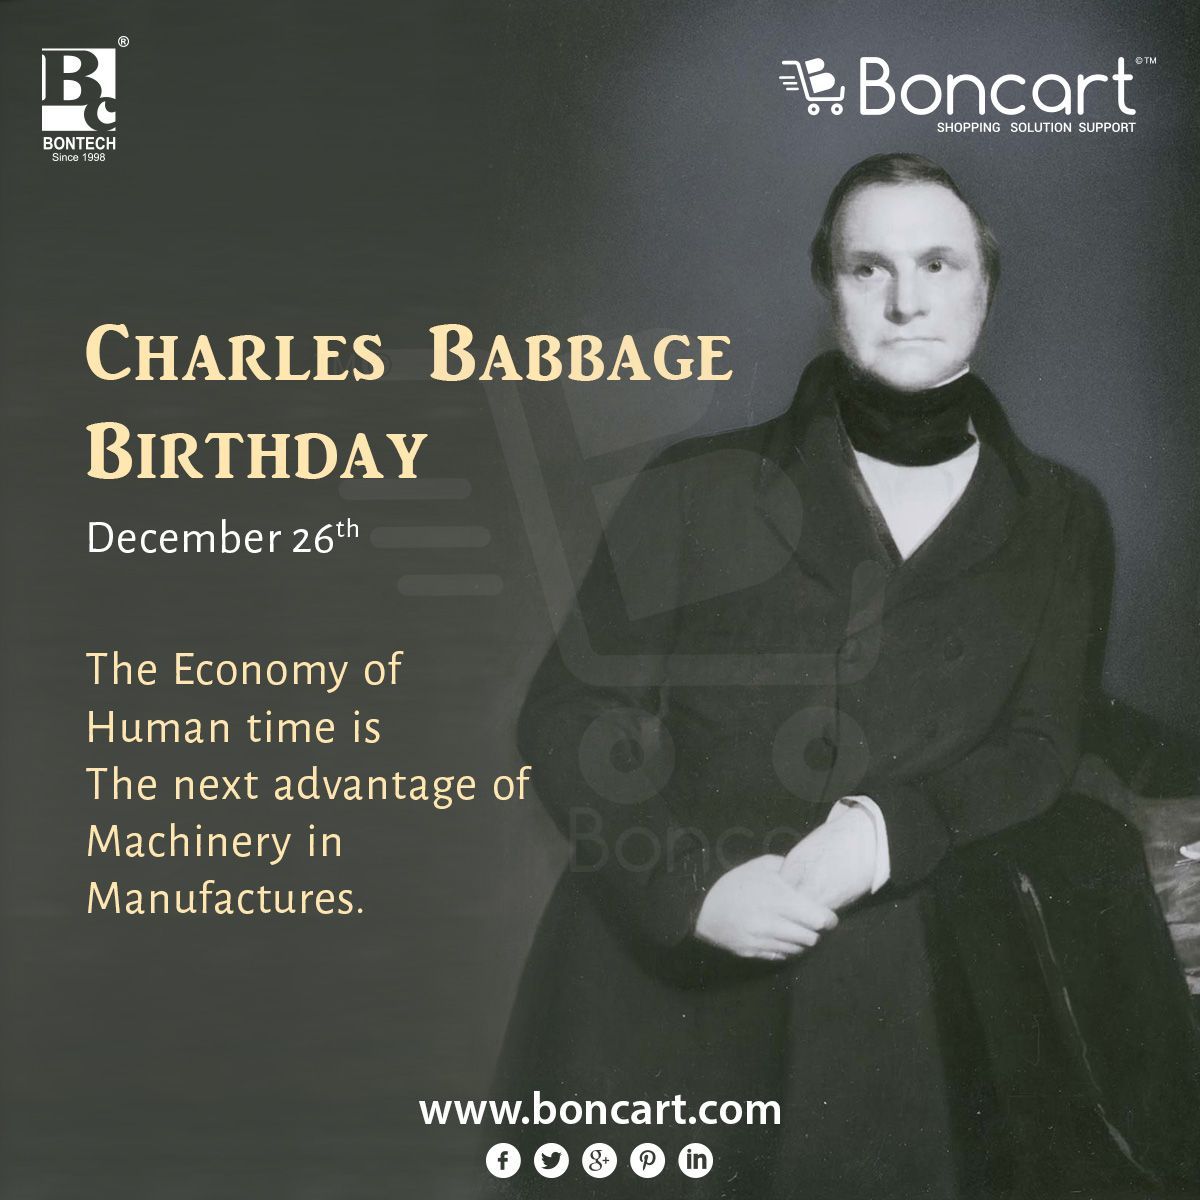 Charles Babbage Birthday December 26. Charles babbage, Day, December 26th